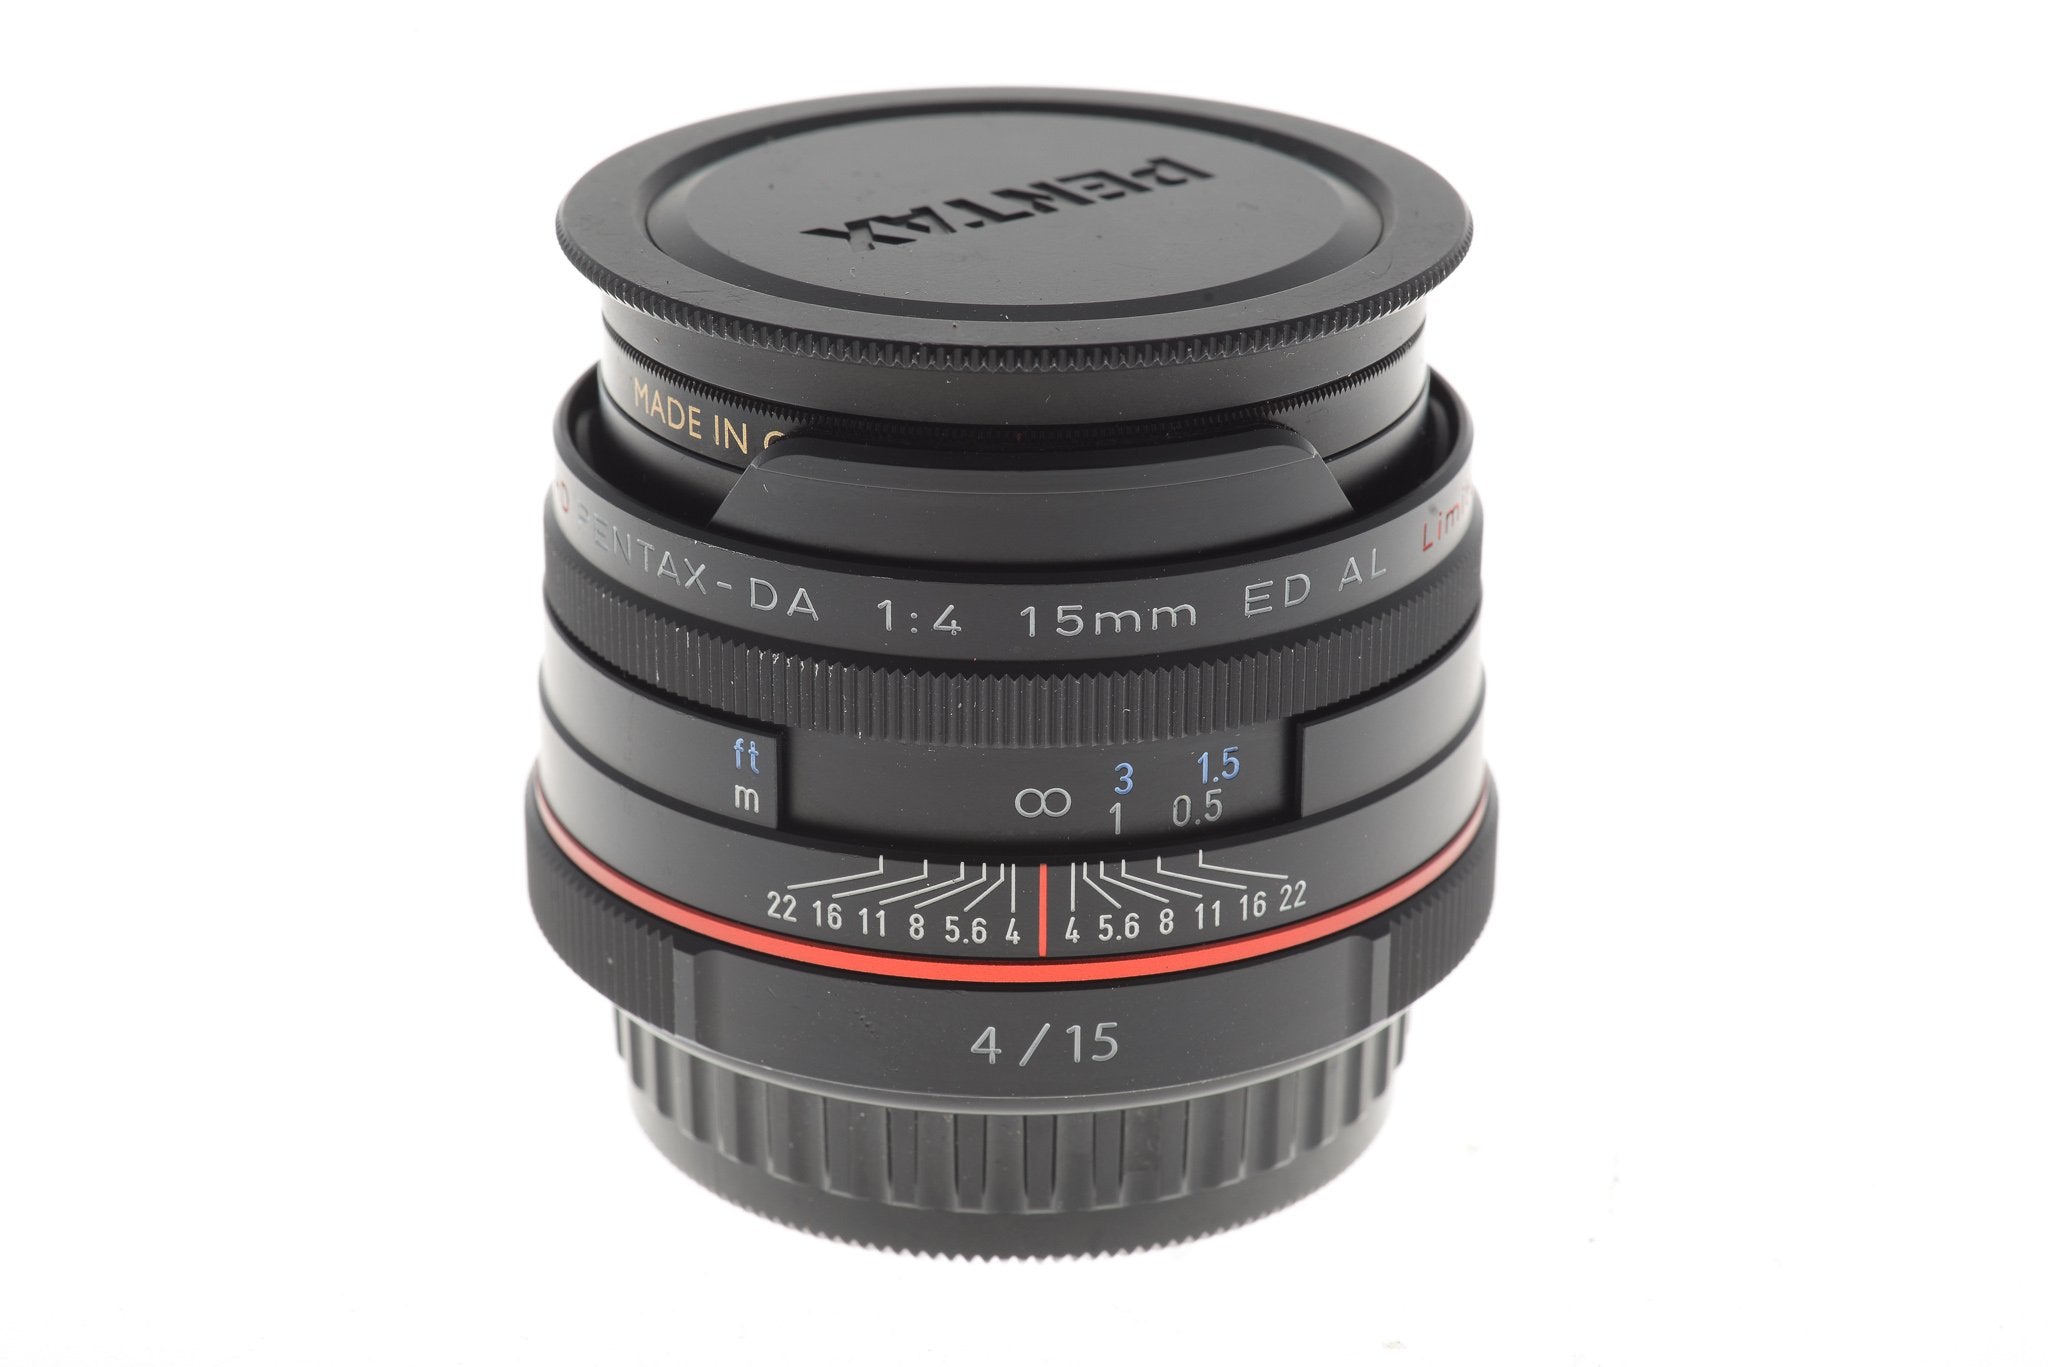 Pentax 15mm f4 ED AL Limited HD Pentax-DA - Lens